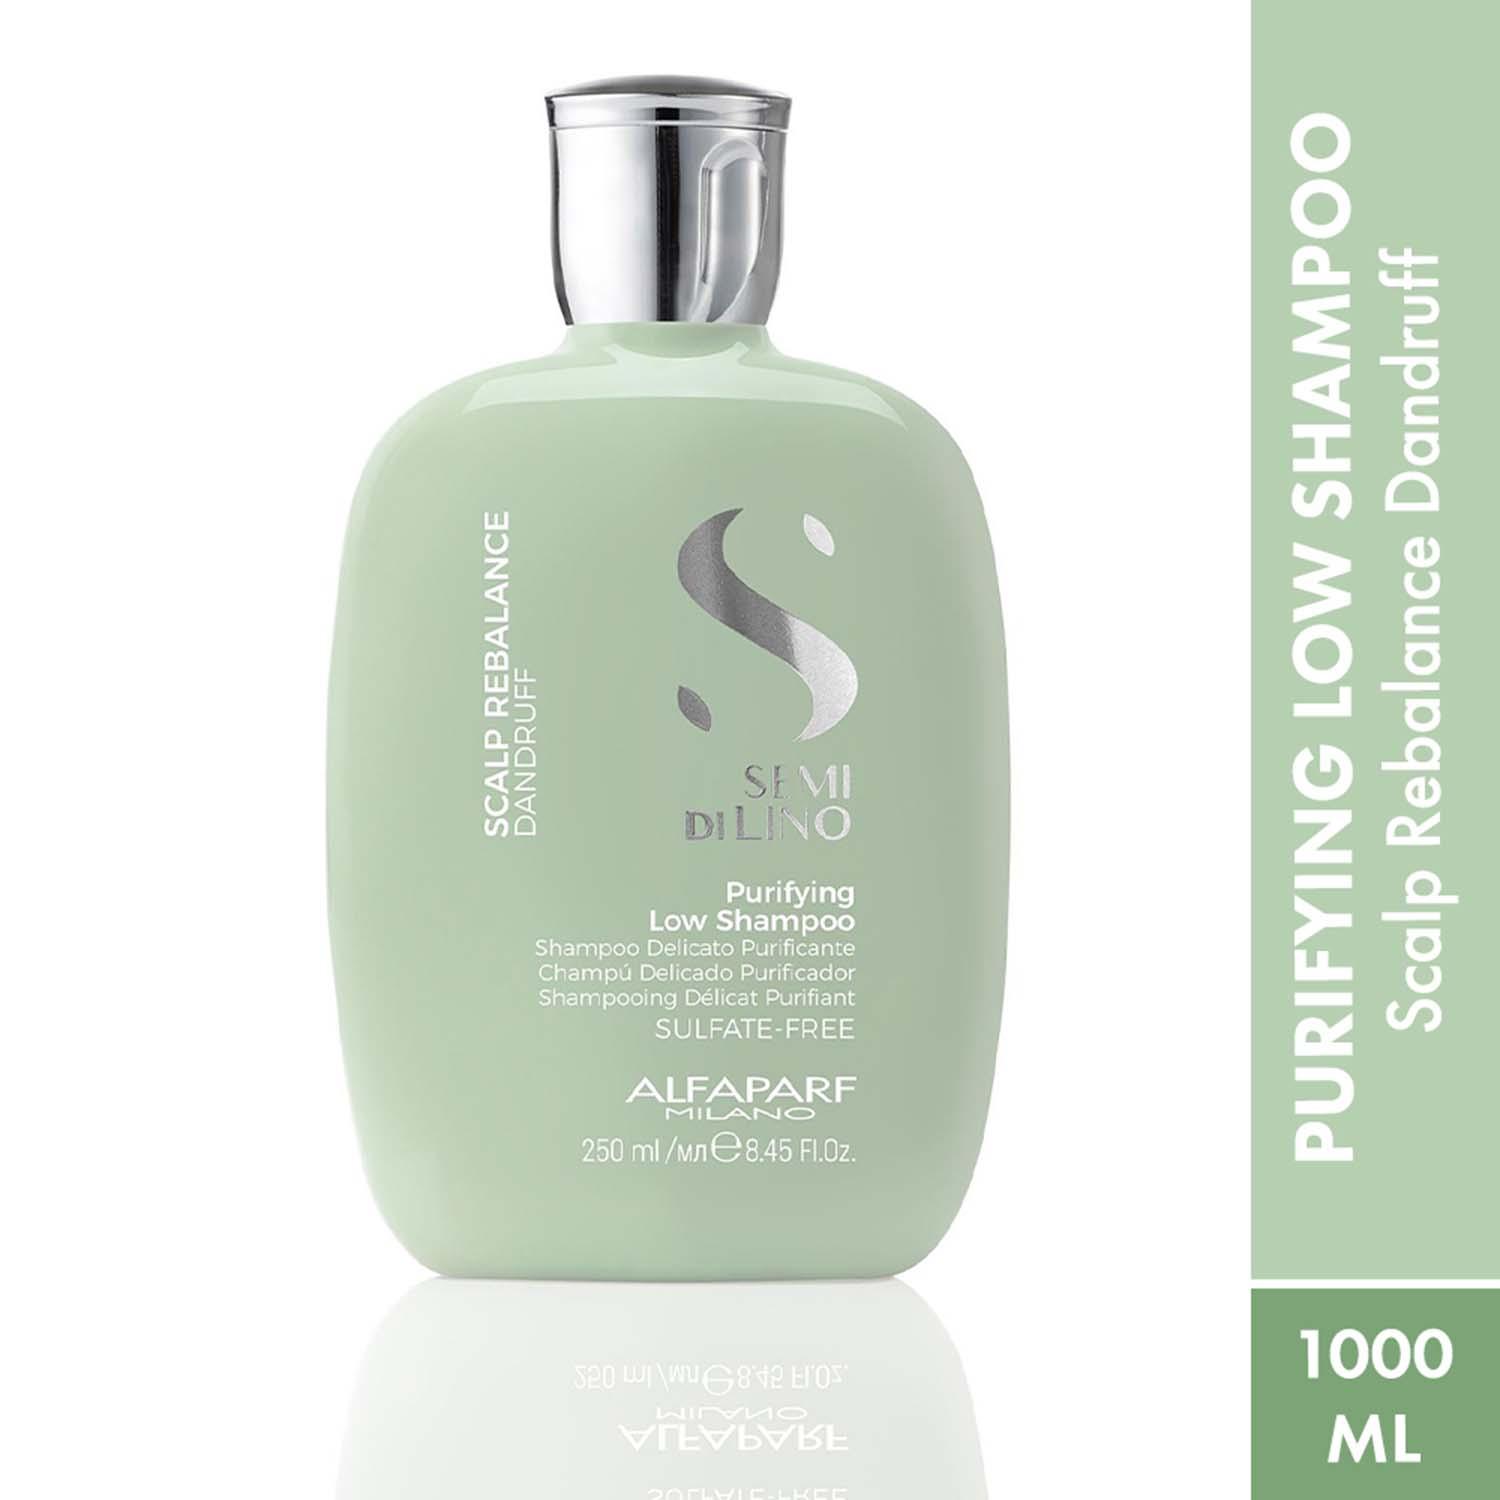 Alfaparf Milano | Alfaparf Milano Scalp Rebalance Purifying Low Shampoo - Anti Dandruff For All Scalps (250 ml)